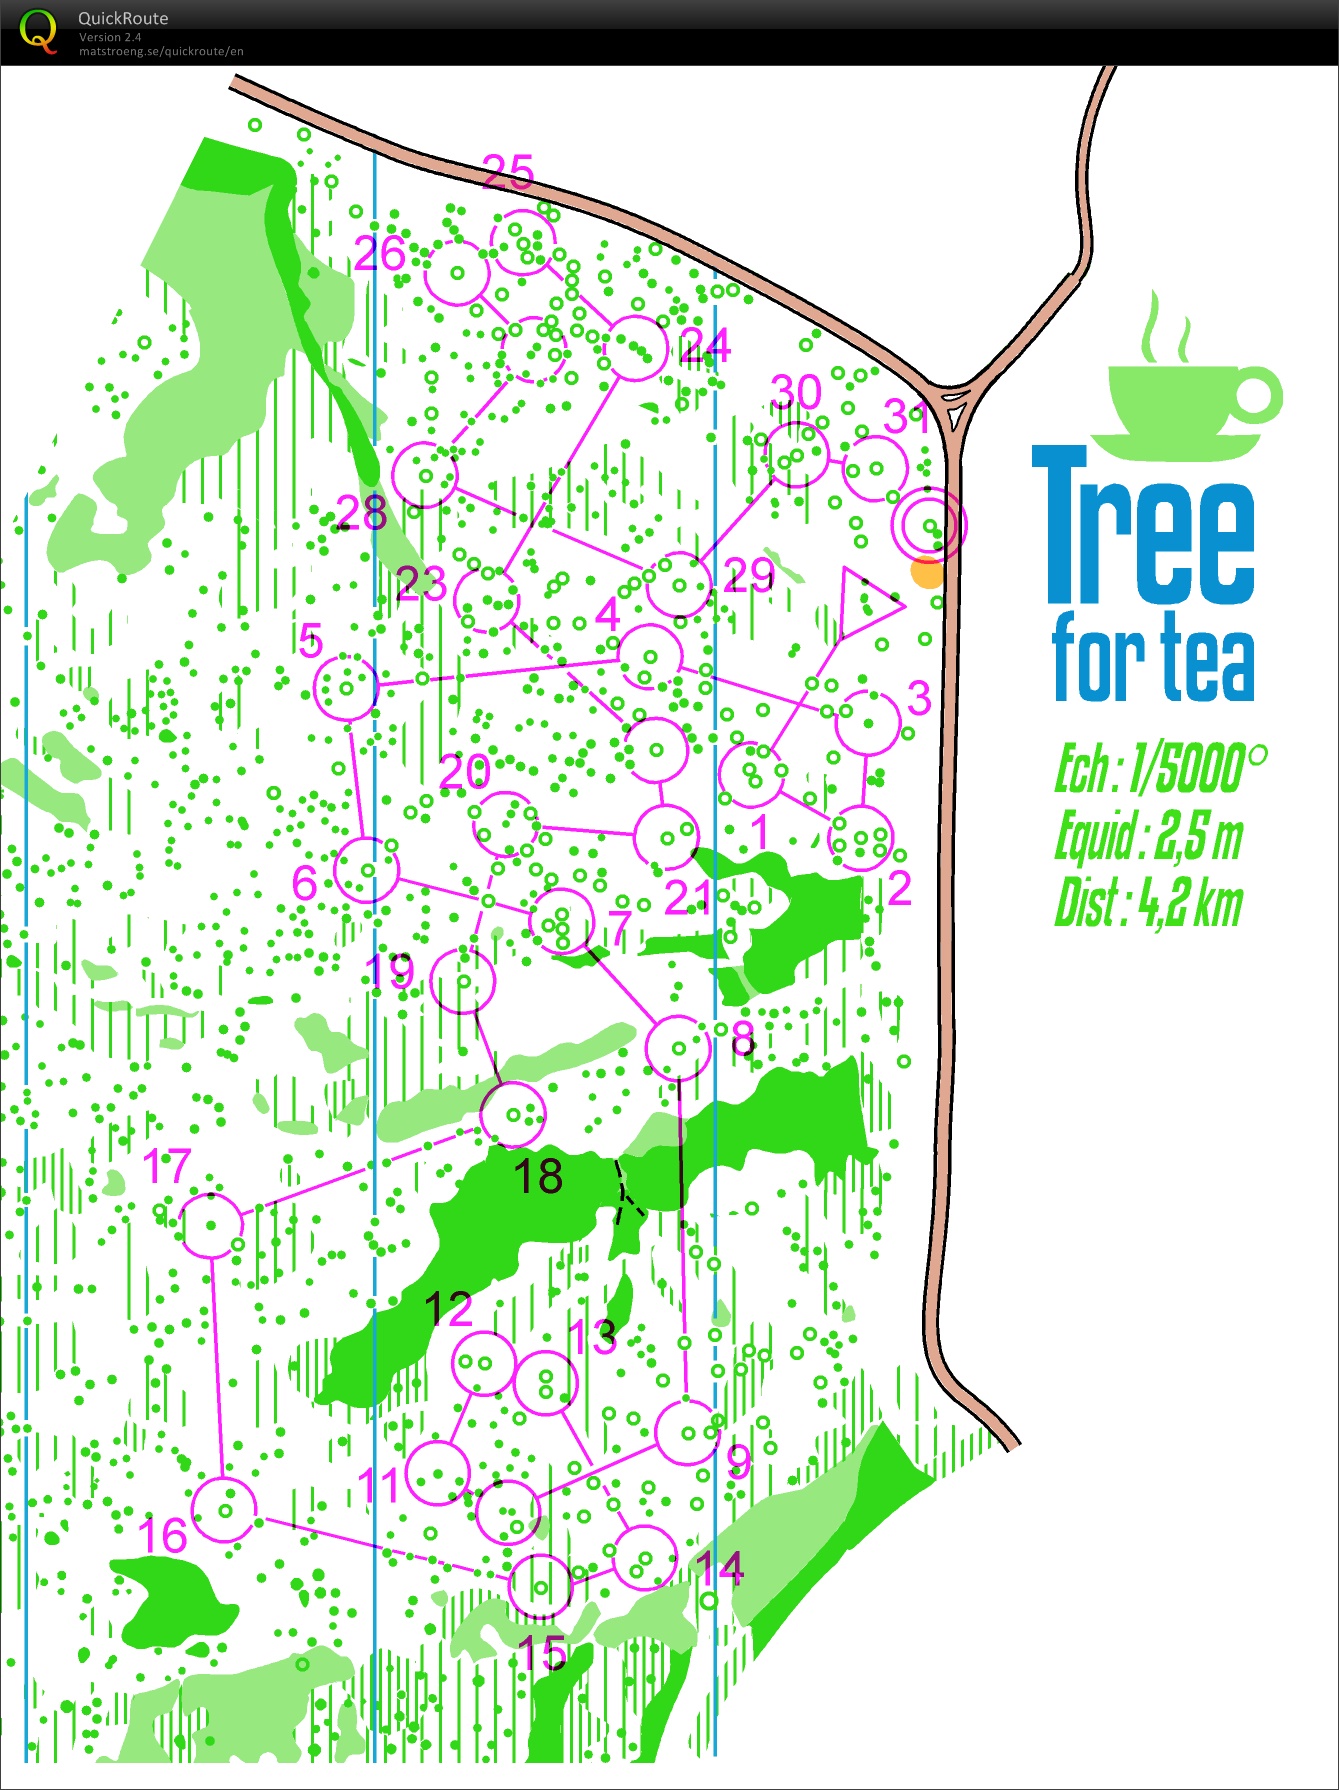 Tree for tea (2016-01-16)